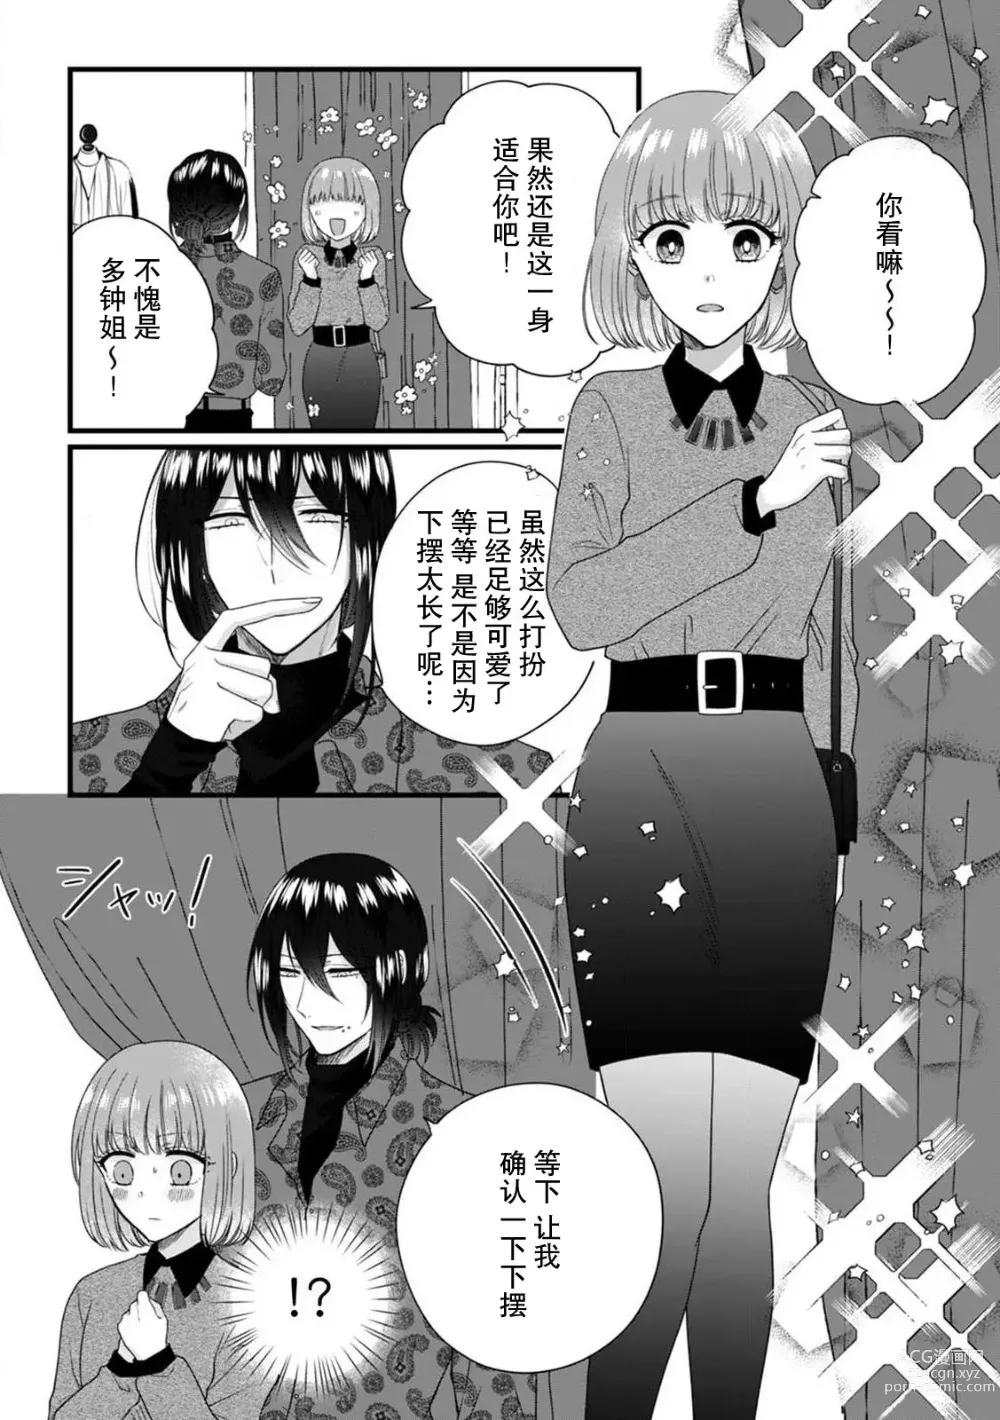 Page 24 of manga 弄湿我的是青梅竹马的男大姐 第一次见到……他认真的雄性一面。 1-5 end